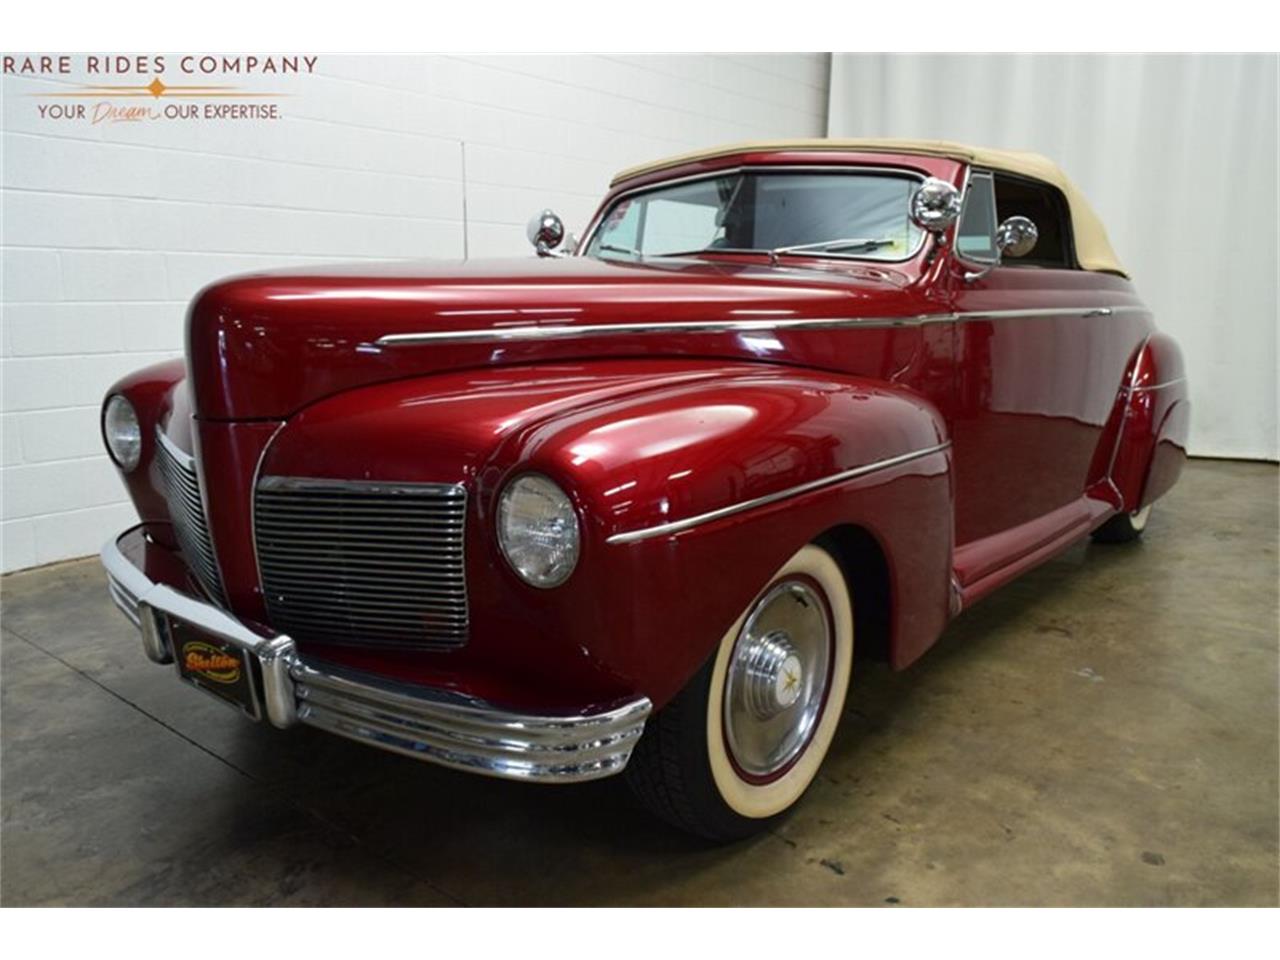 For Sale: 1941 Mercury Custom in Mooresville, North Carolina for sale in Mooresville, NC